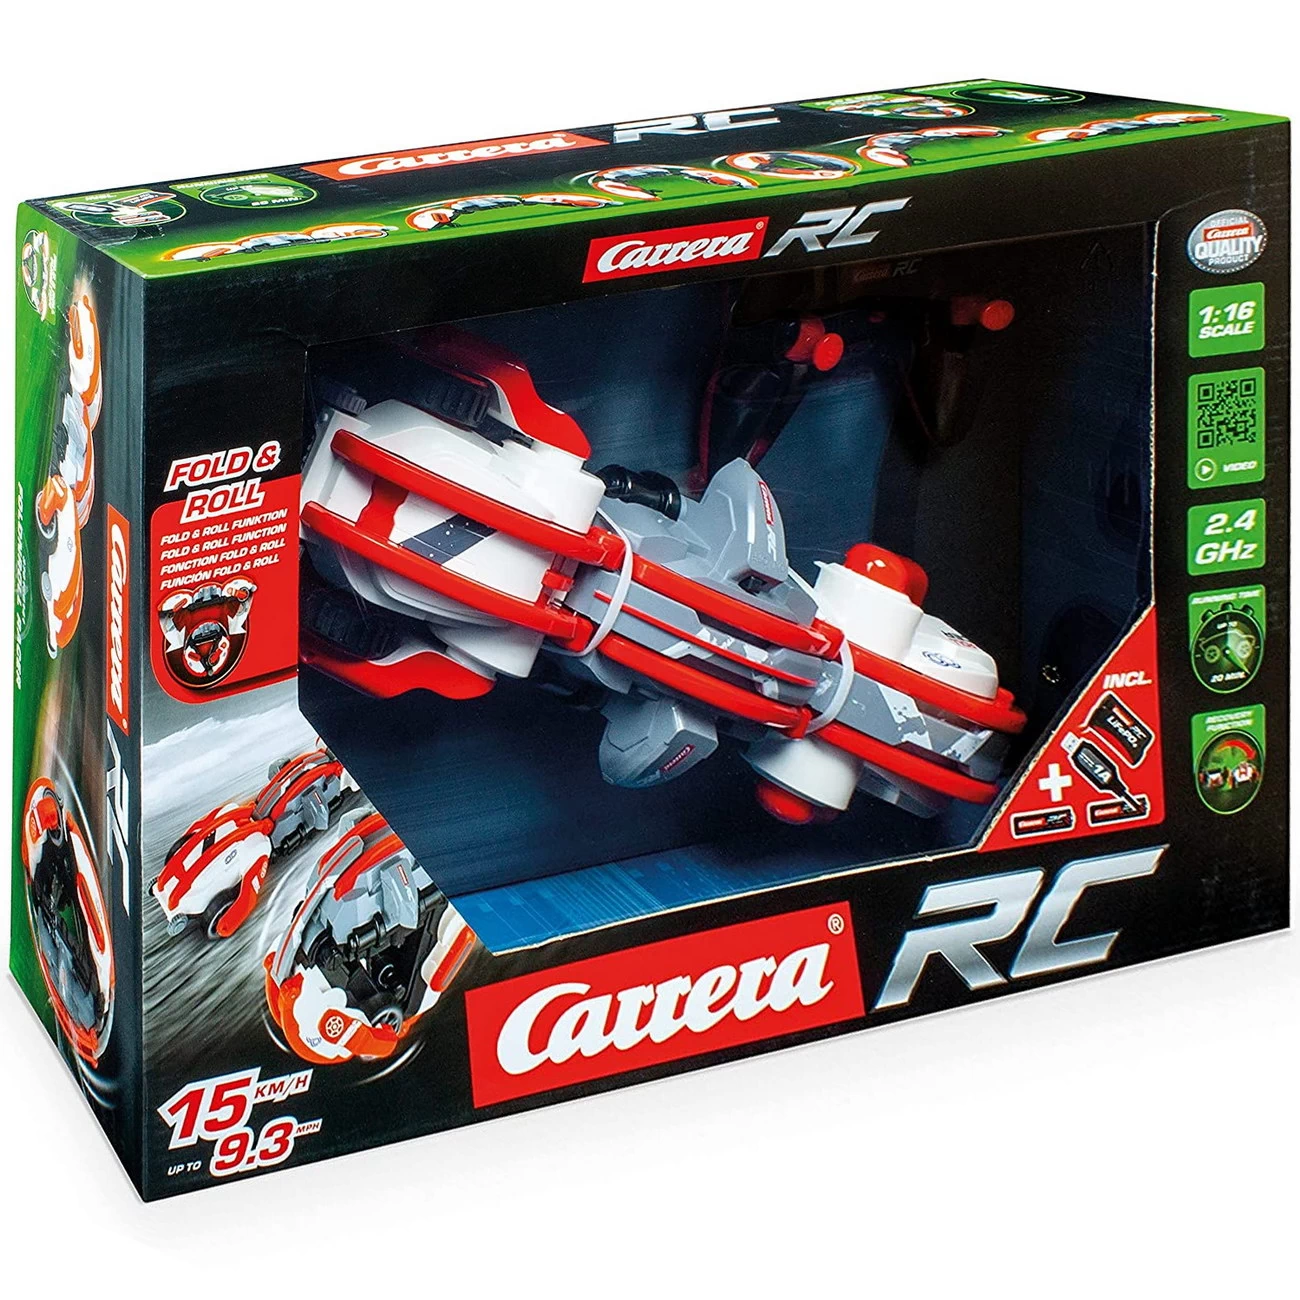 Carrera R/C - FoldNRoll Racer (370160141)